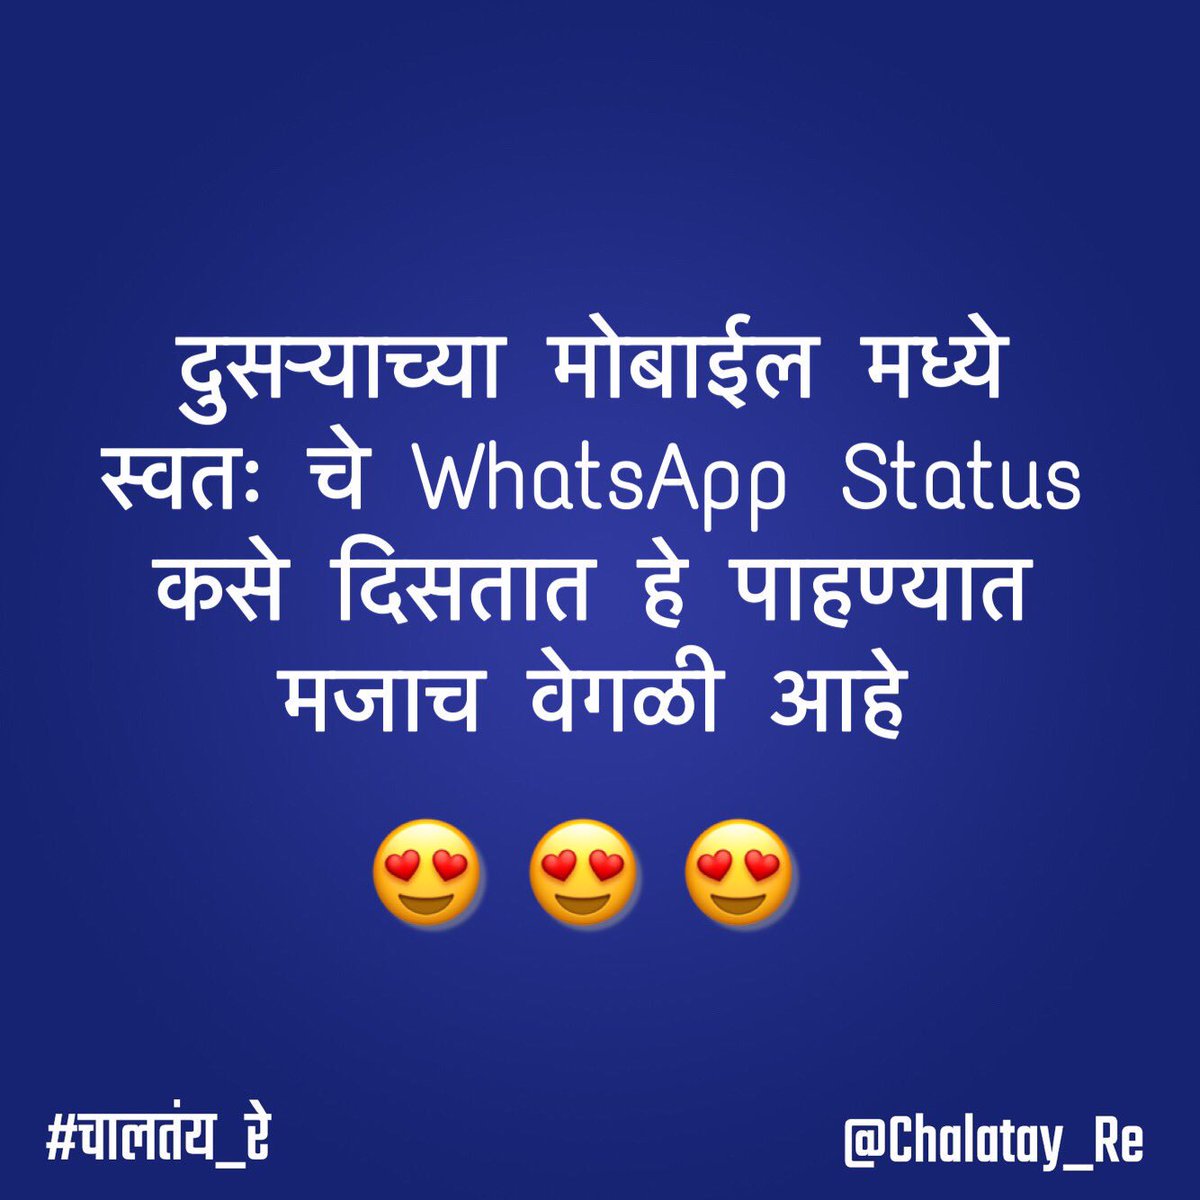 हि सवय मुलींमध्ये जास्तच असते 😍😜 #whatsapp #whatsappstatus #whatsappdp #girlthings #joy #nustarada #smartphones #feature #love #whatsappquotes